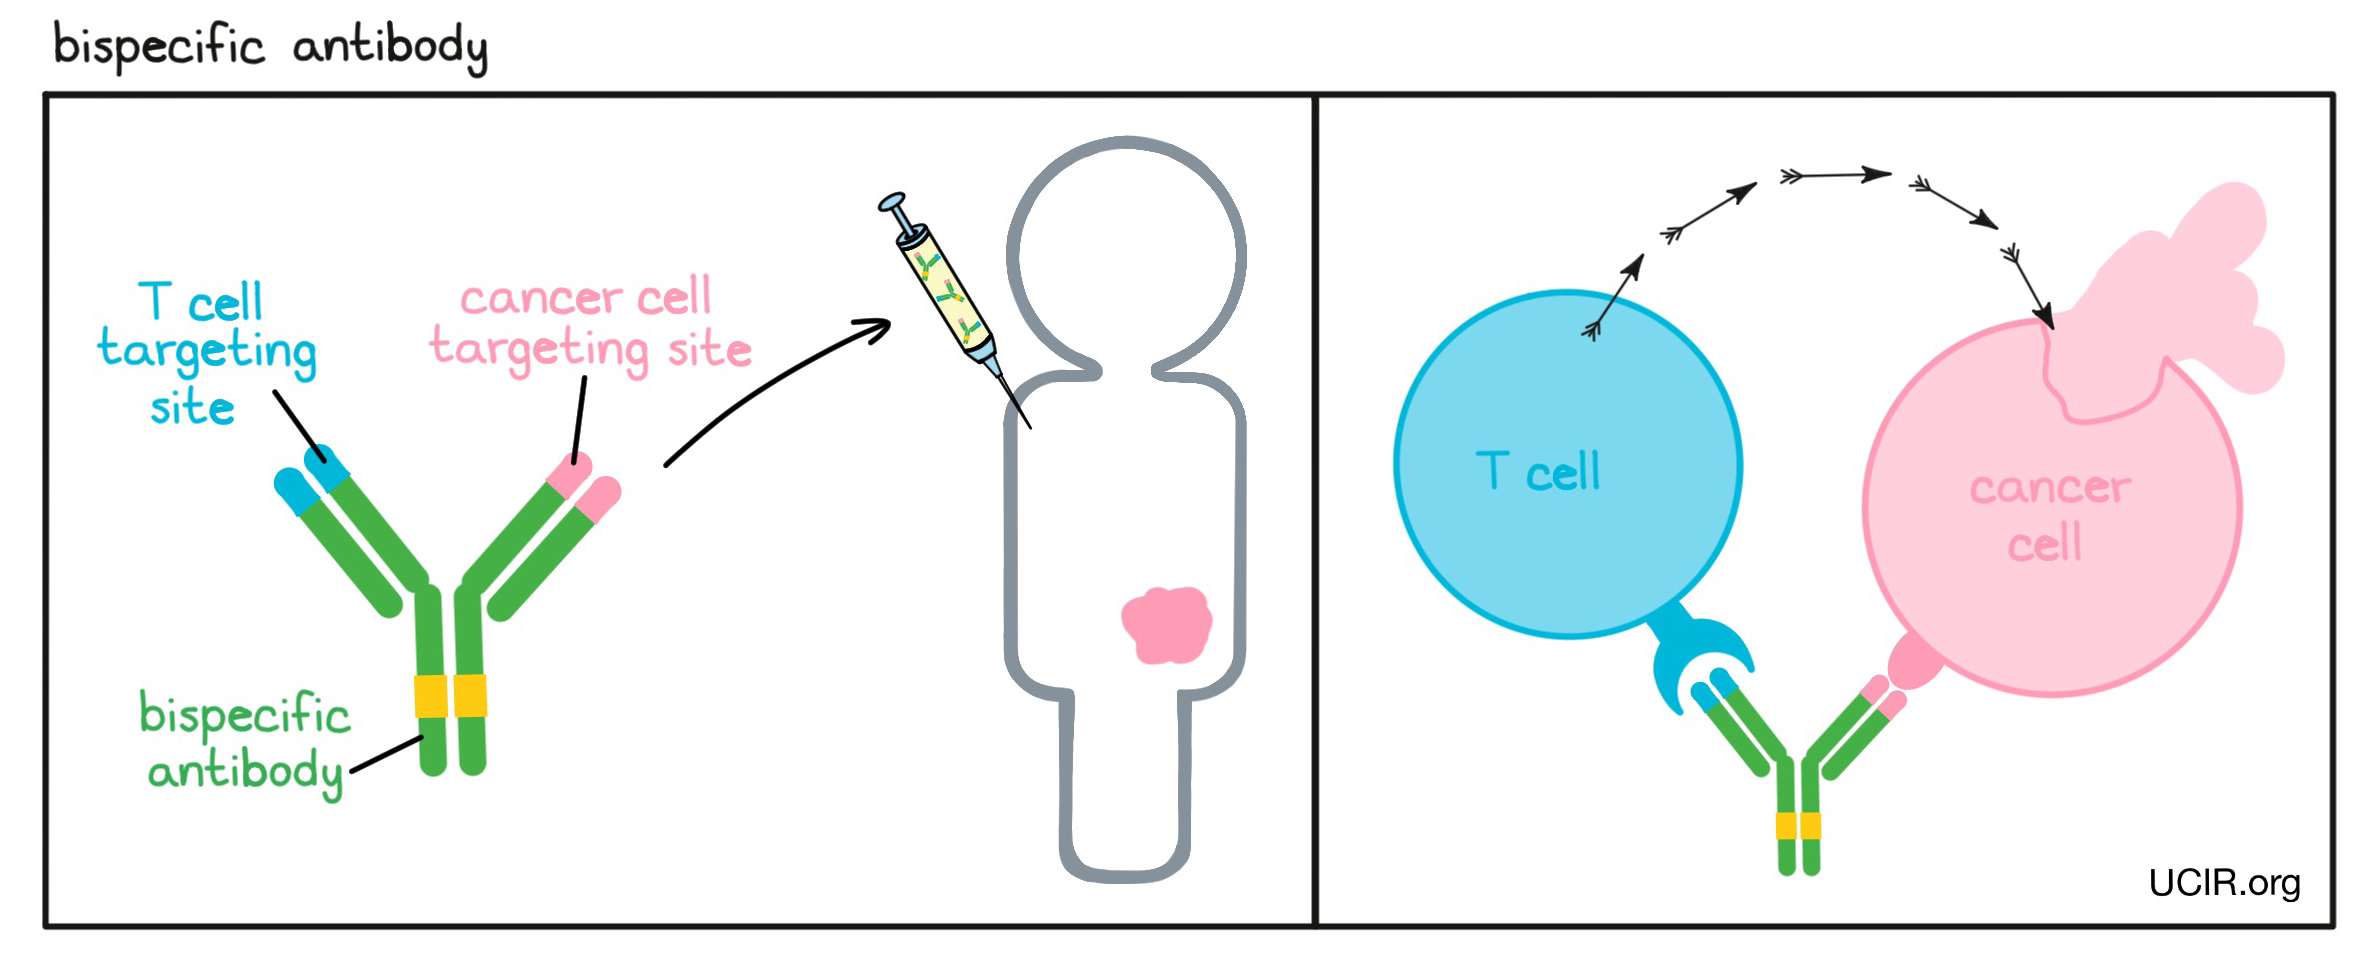 Biospecific antibody illustration